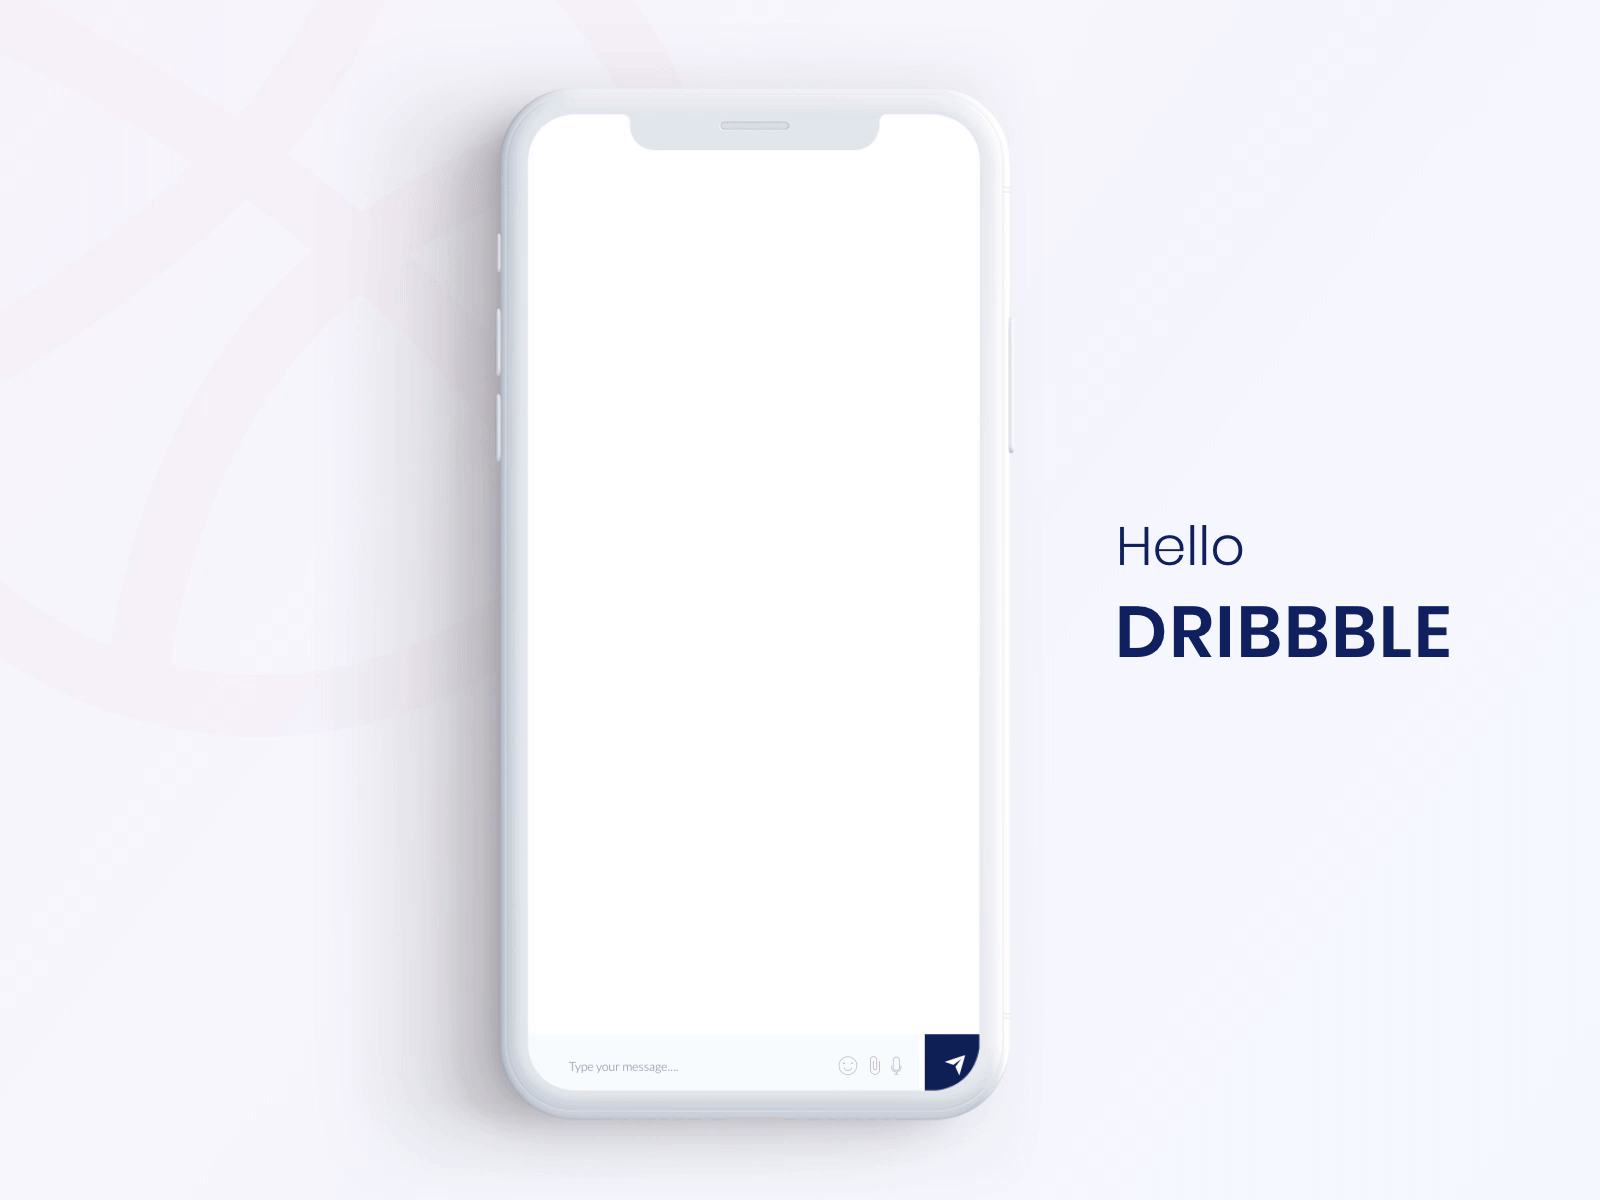 Hello Dribbble! Thank you for the Invitation by Vishal Gupta on Dribbble